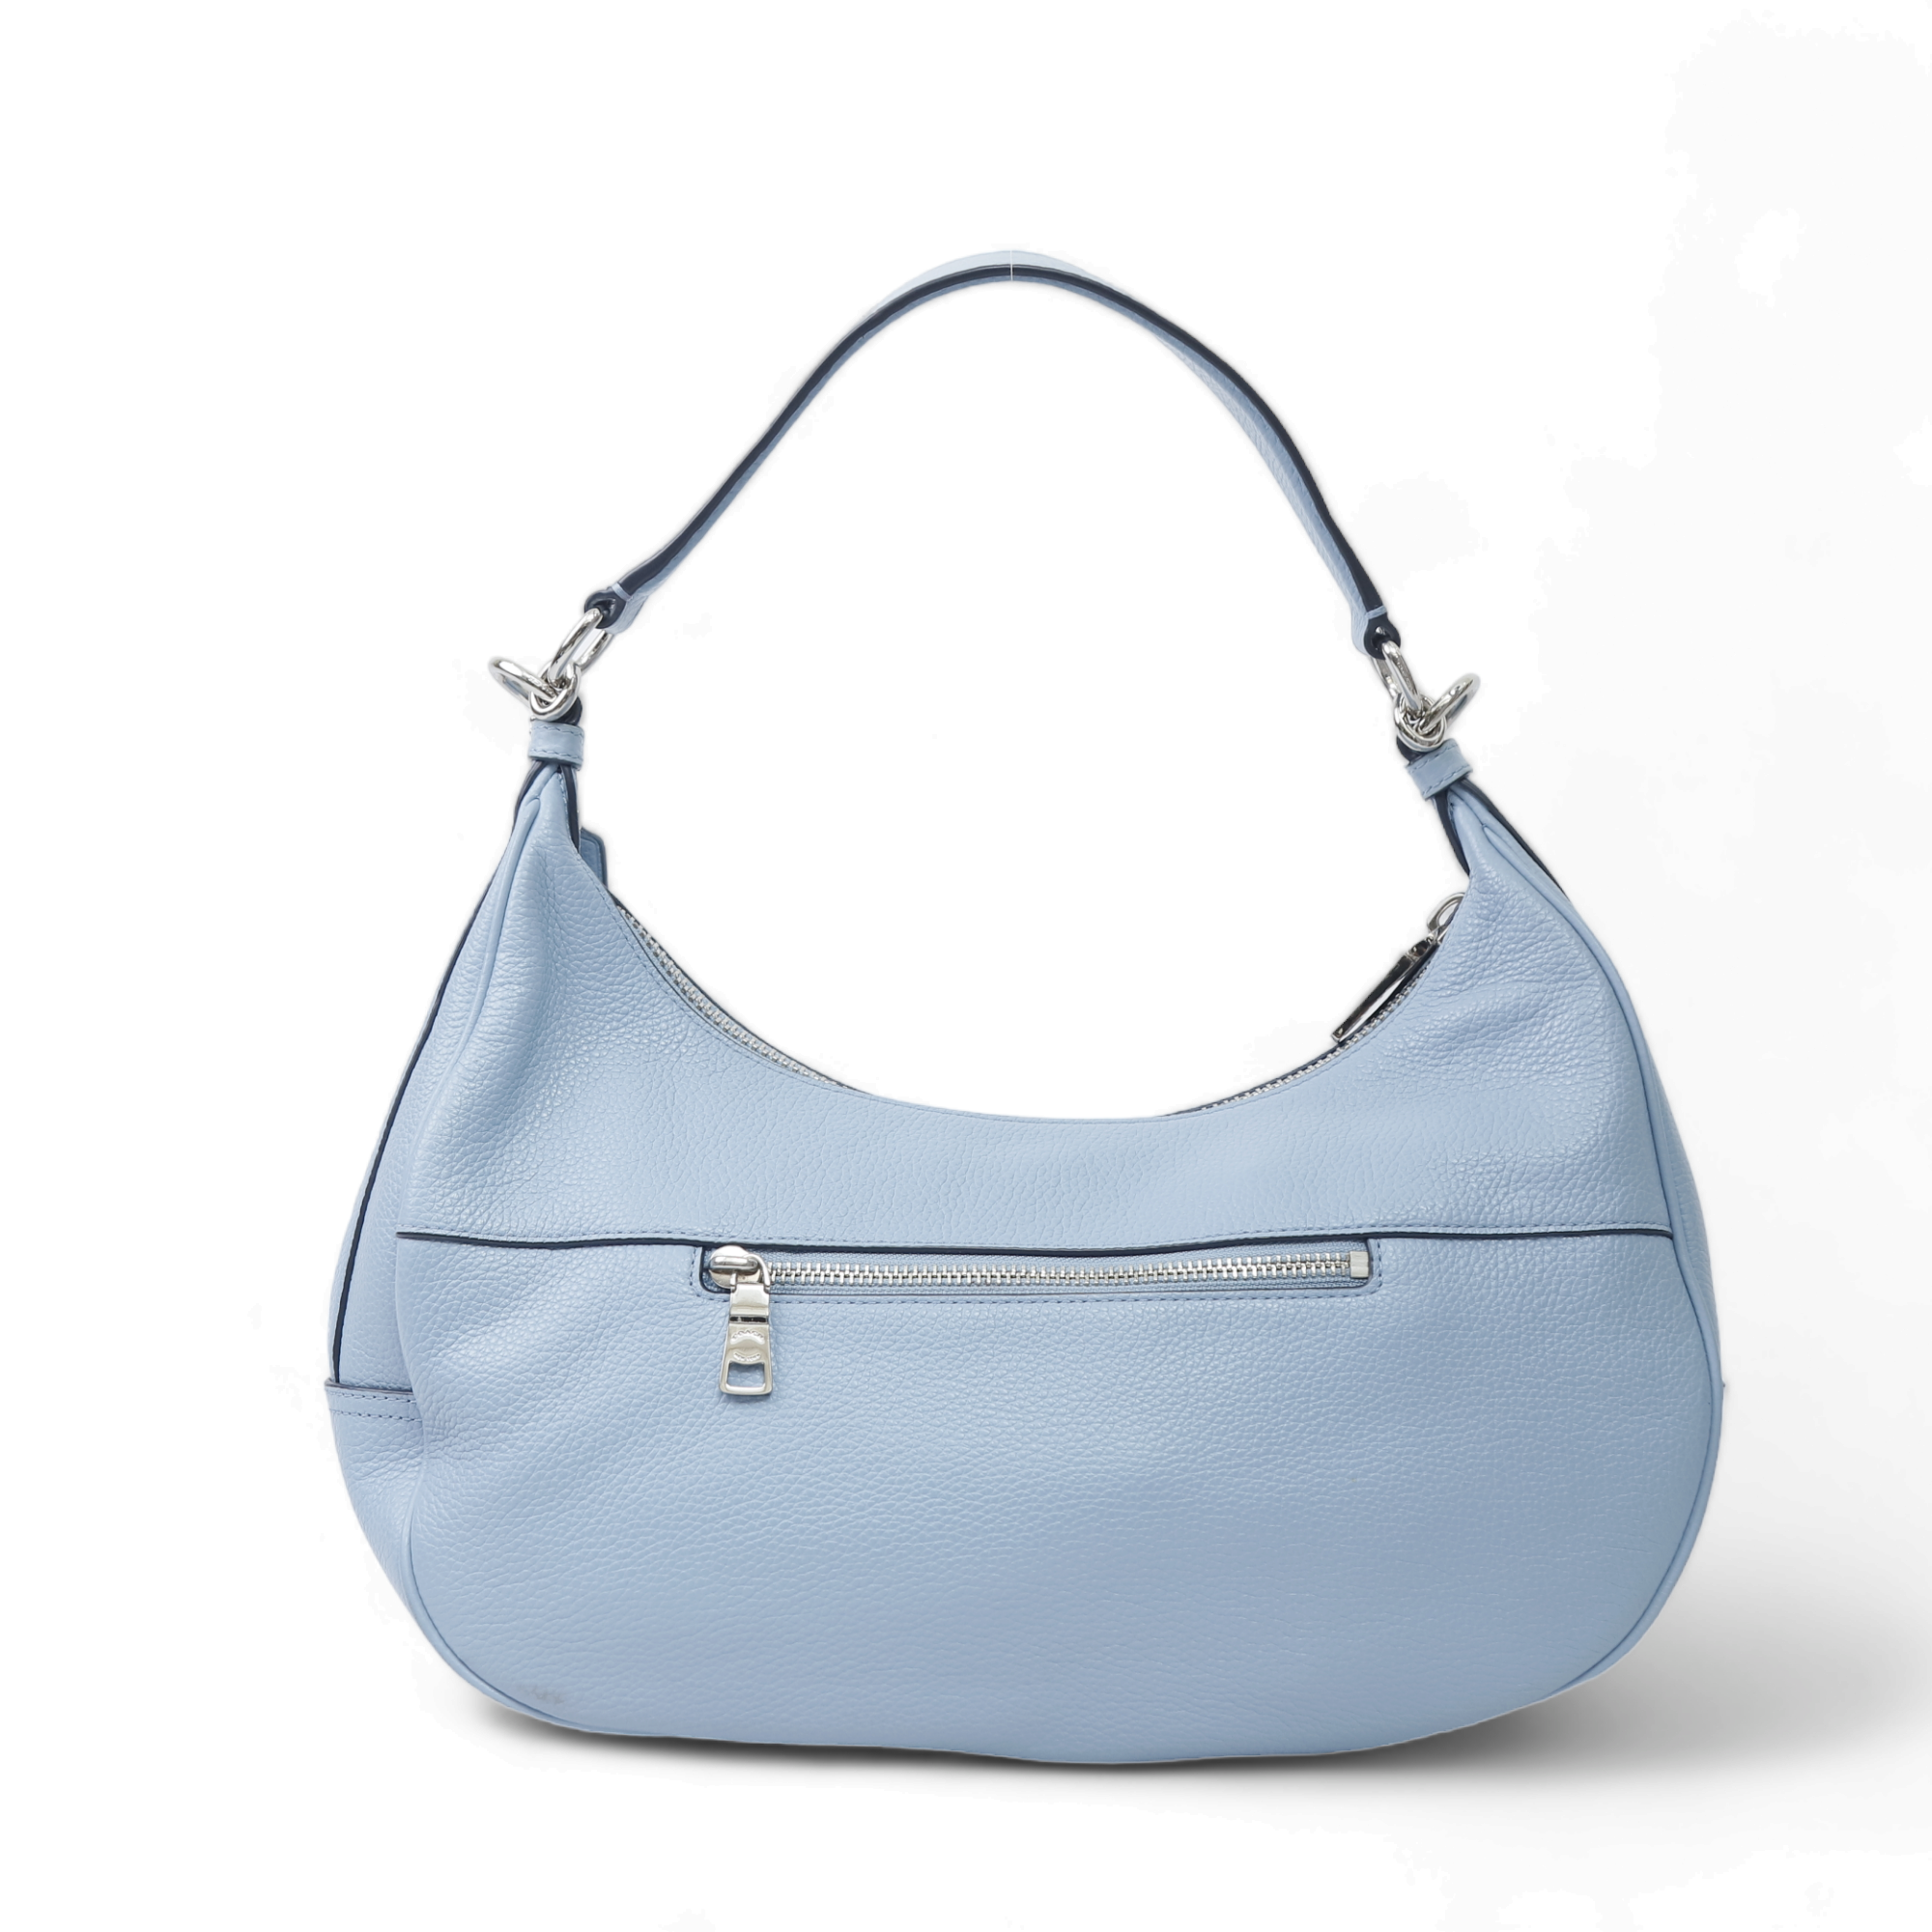 Buy Iswee Genuine Leather Purses and Handbags for Women Shoulder Bag Top  Handle Satchel Ladies Hobo Crossbody Bags, Light Blue, Medium at Amazon.in